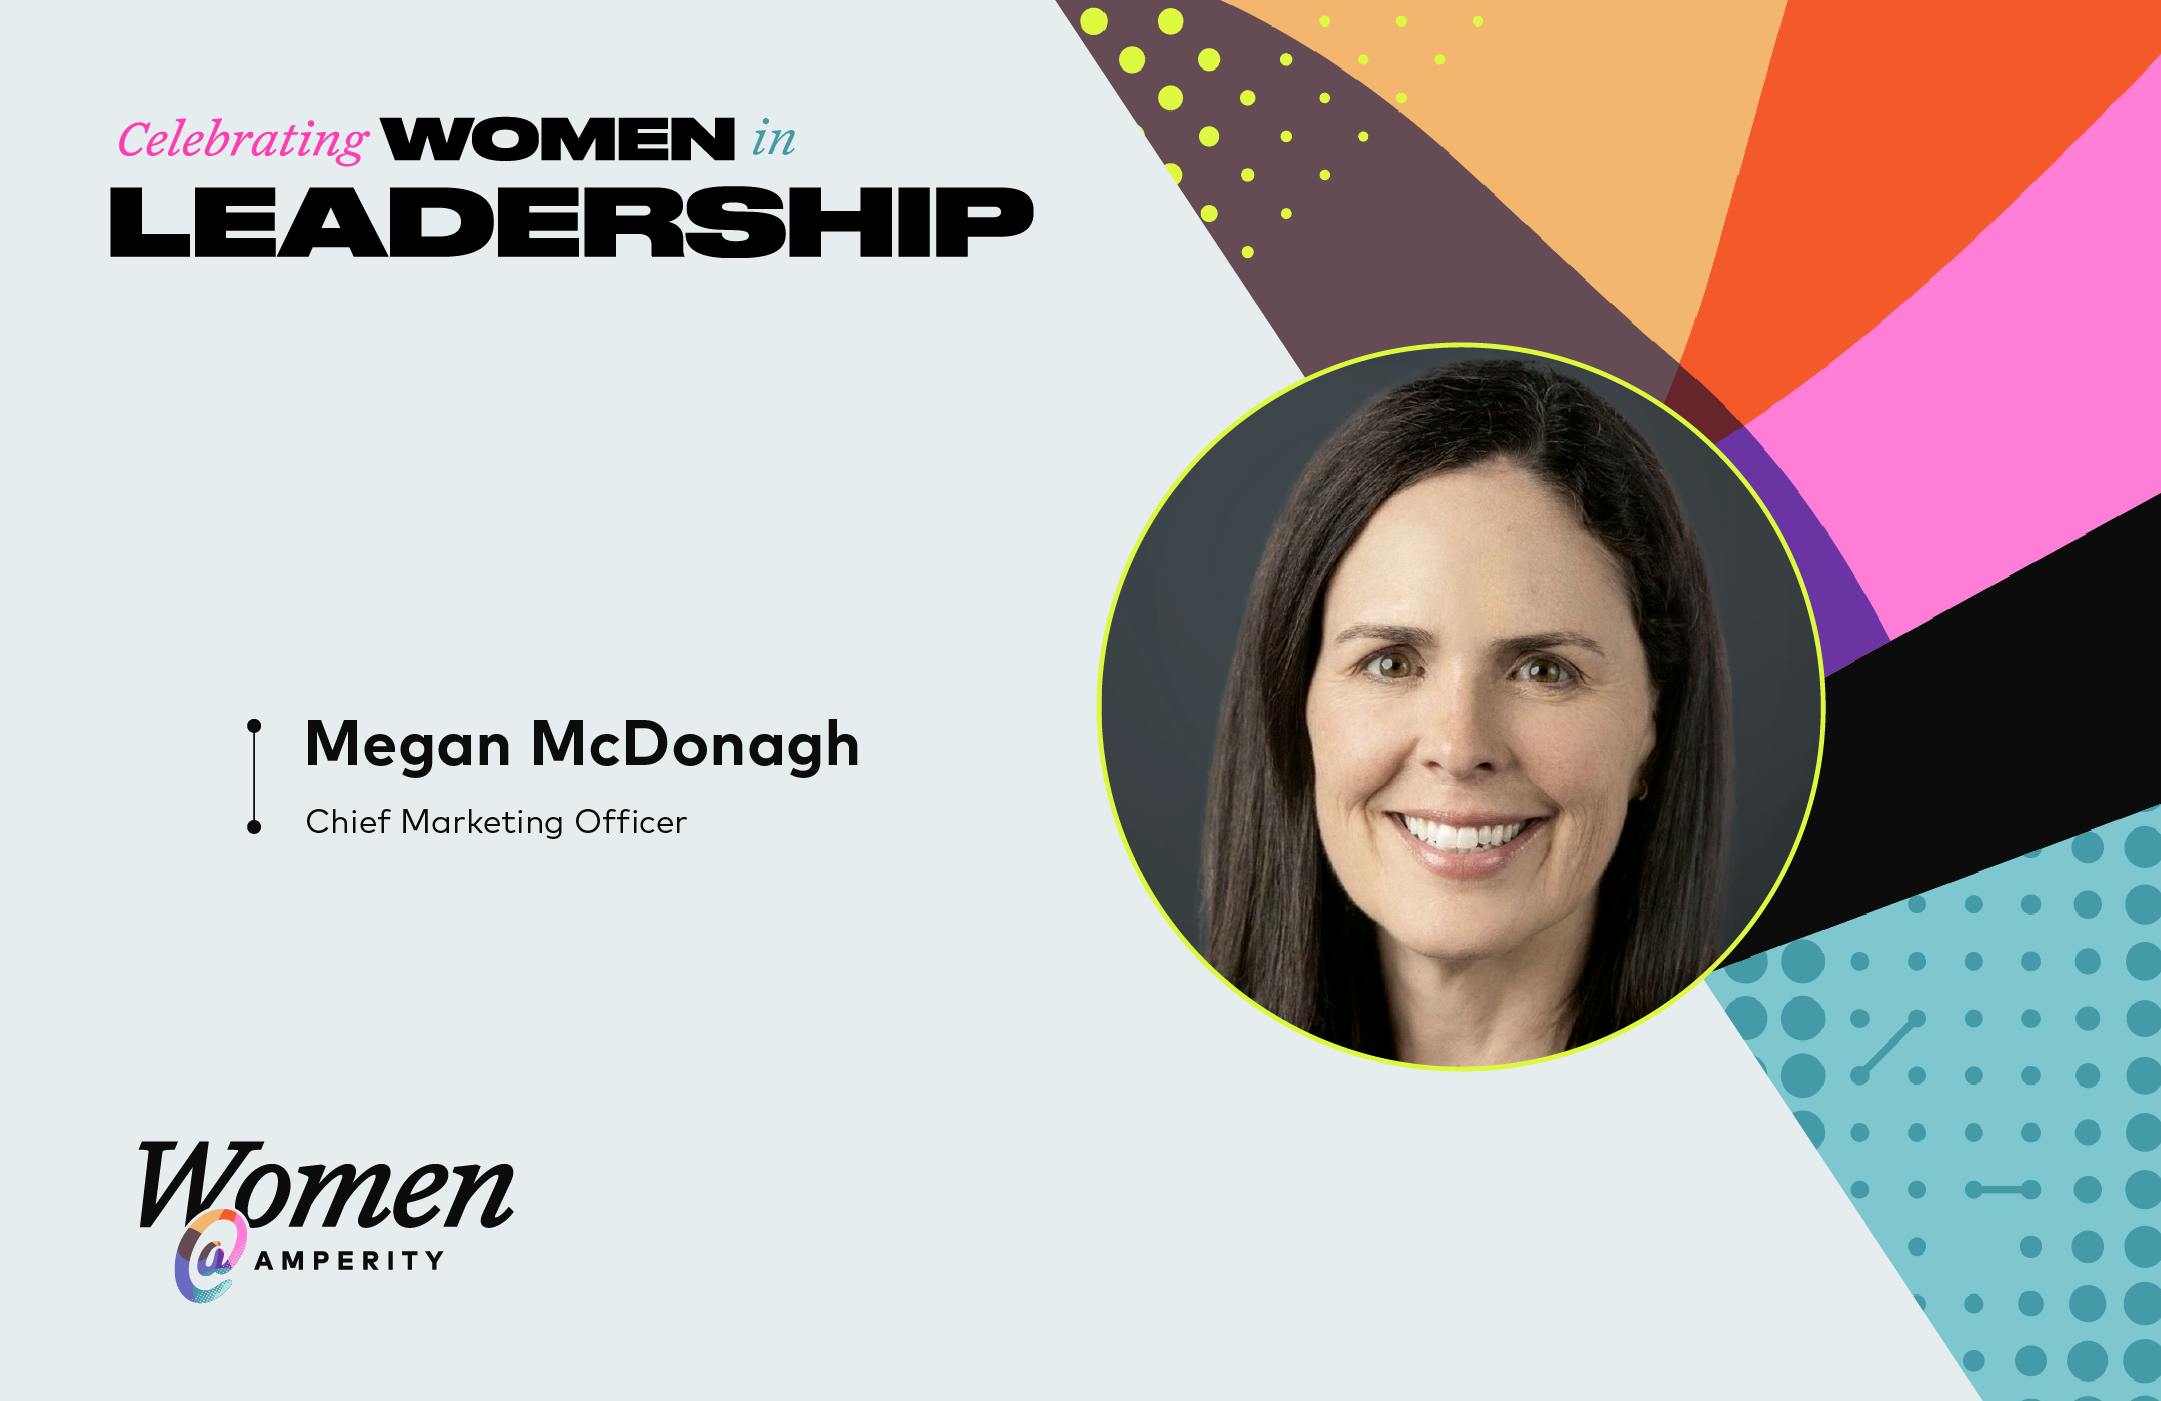 Celebrating women in leadership: Megan McDonagh, CMO at Amperity